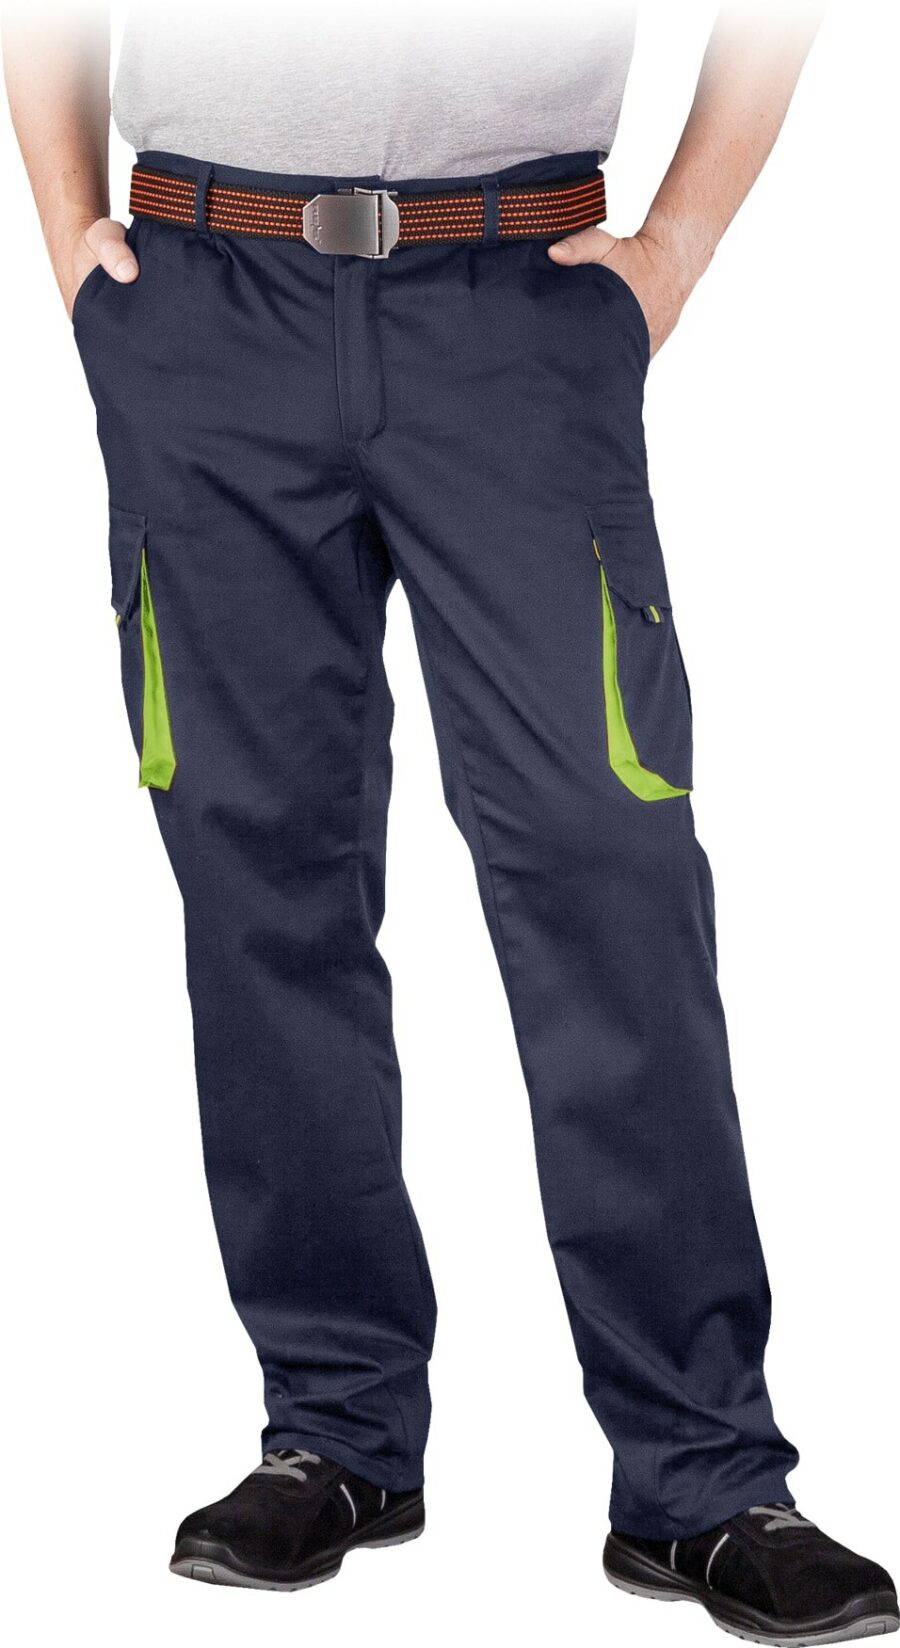 Pracovní kalhoty s elastanem MANNLAND NAVY ORANGE